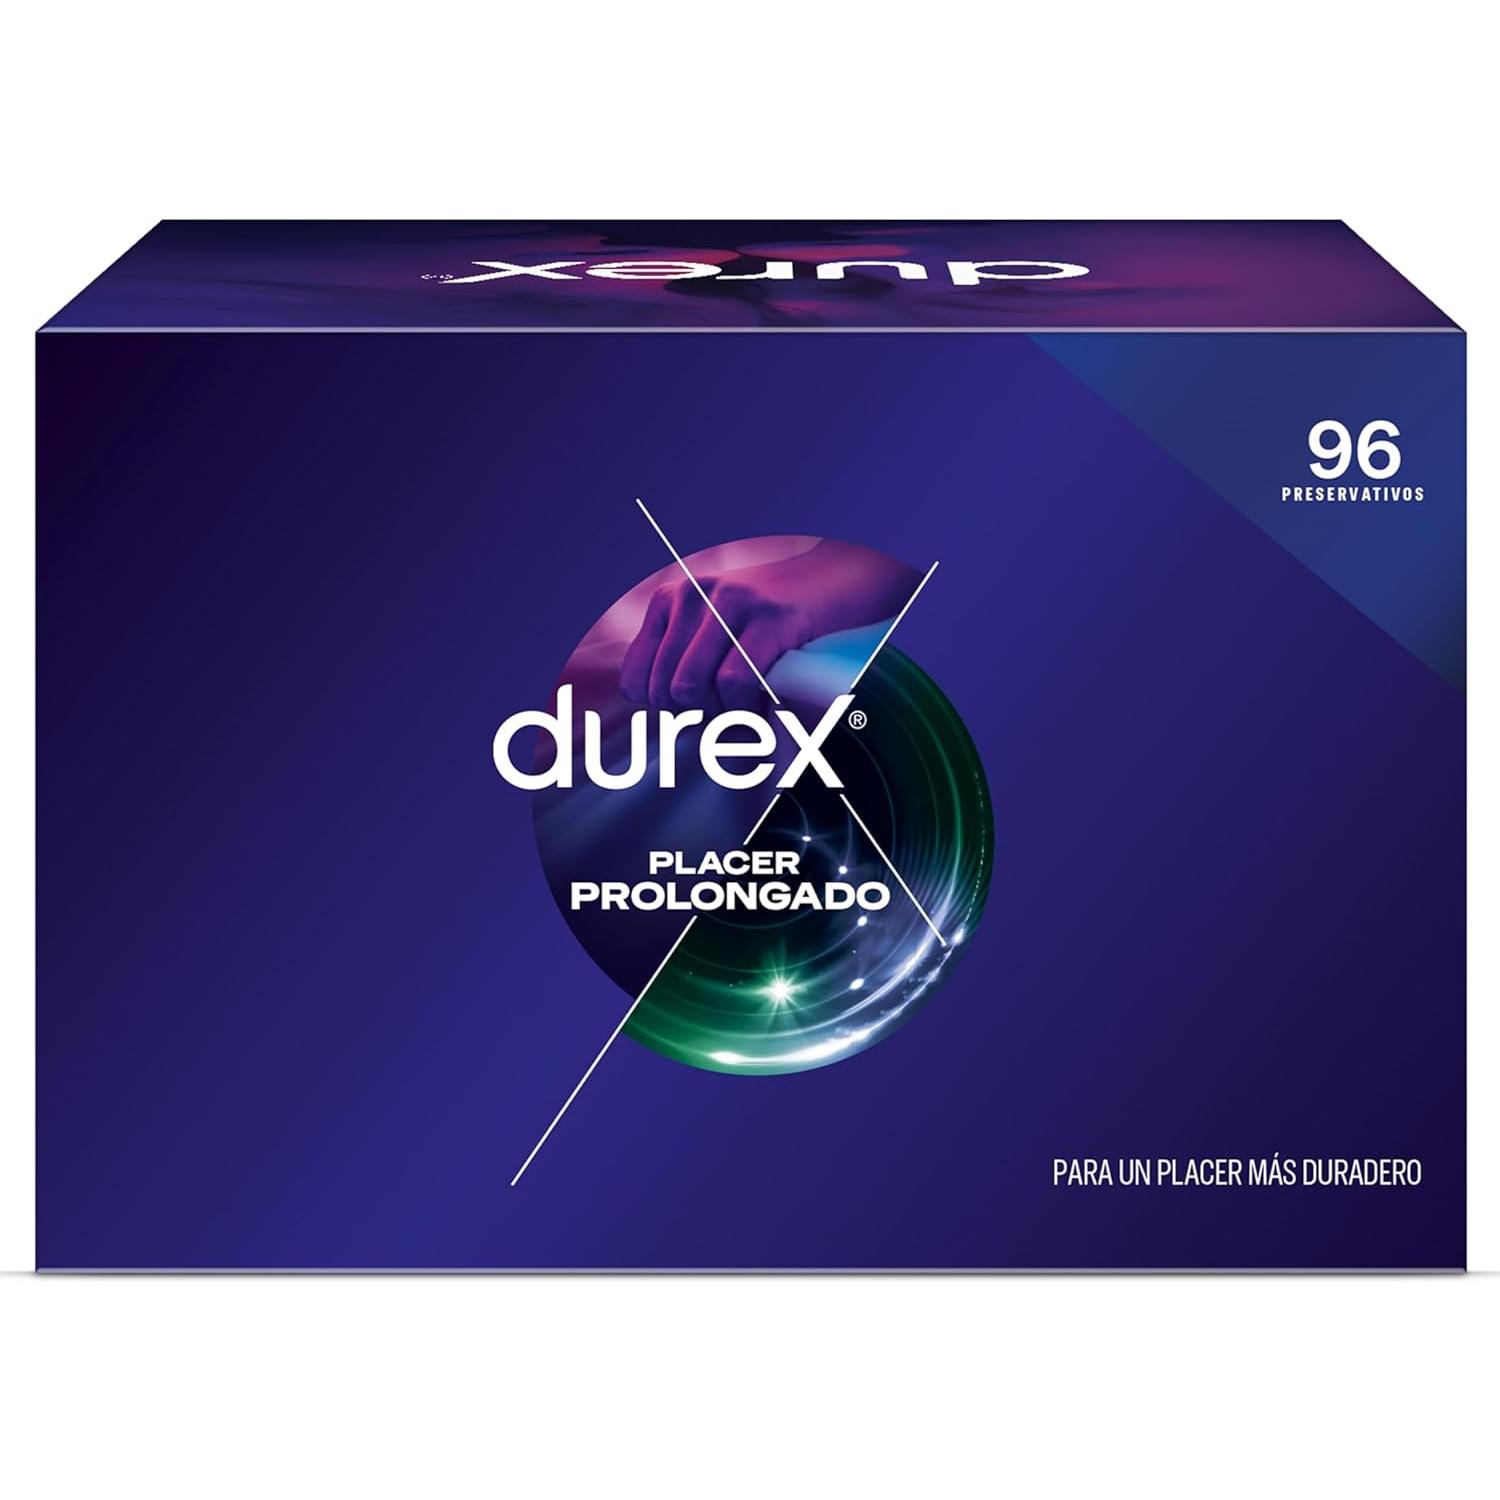 Durex - Durex - Condones Placer Prolongado, Pack de 96 Preservativos para Sexo Seguro. Perímetro Regular, Grosor Medio. 8 Cajitas